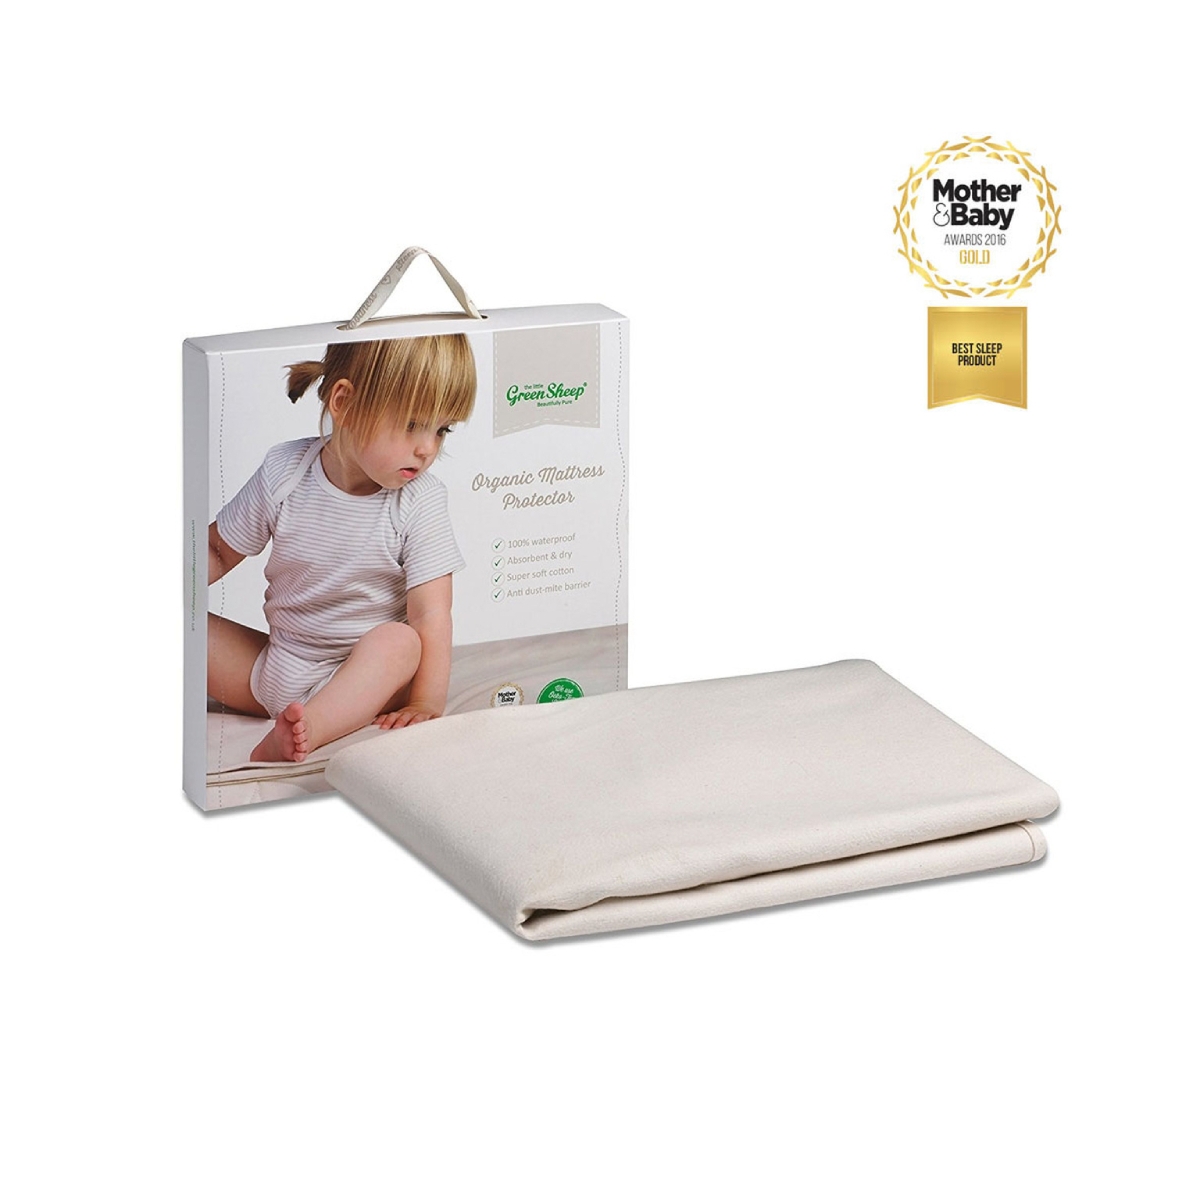 The Little Green Sheep Waterproof Cot Bed Mattress Protector